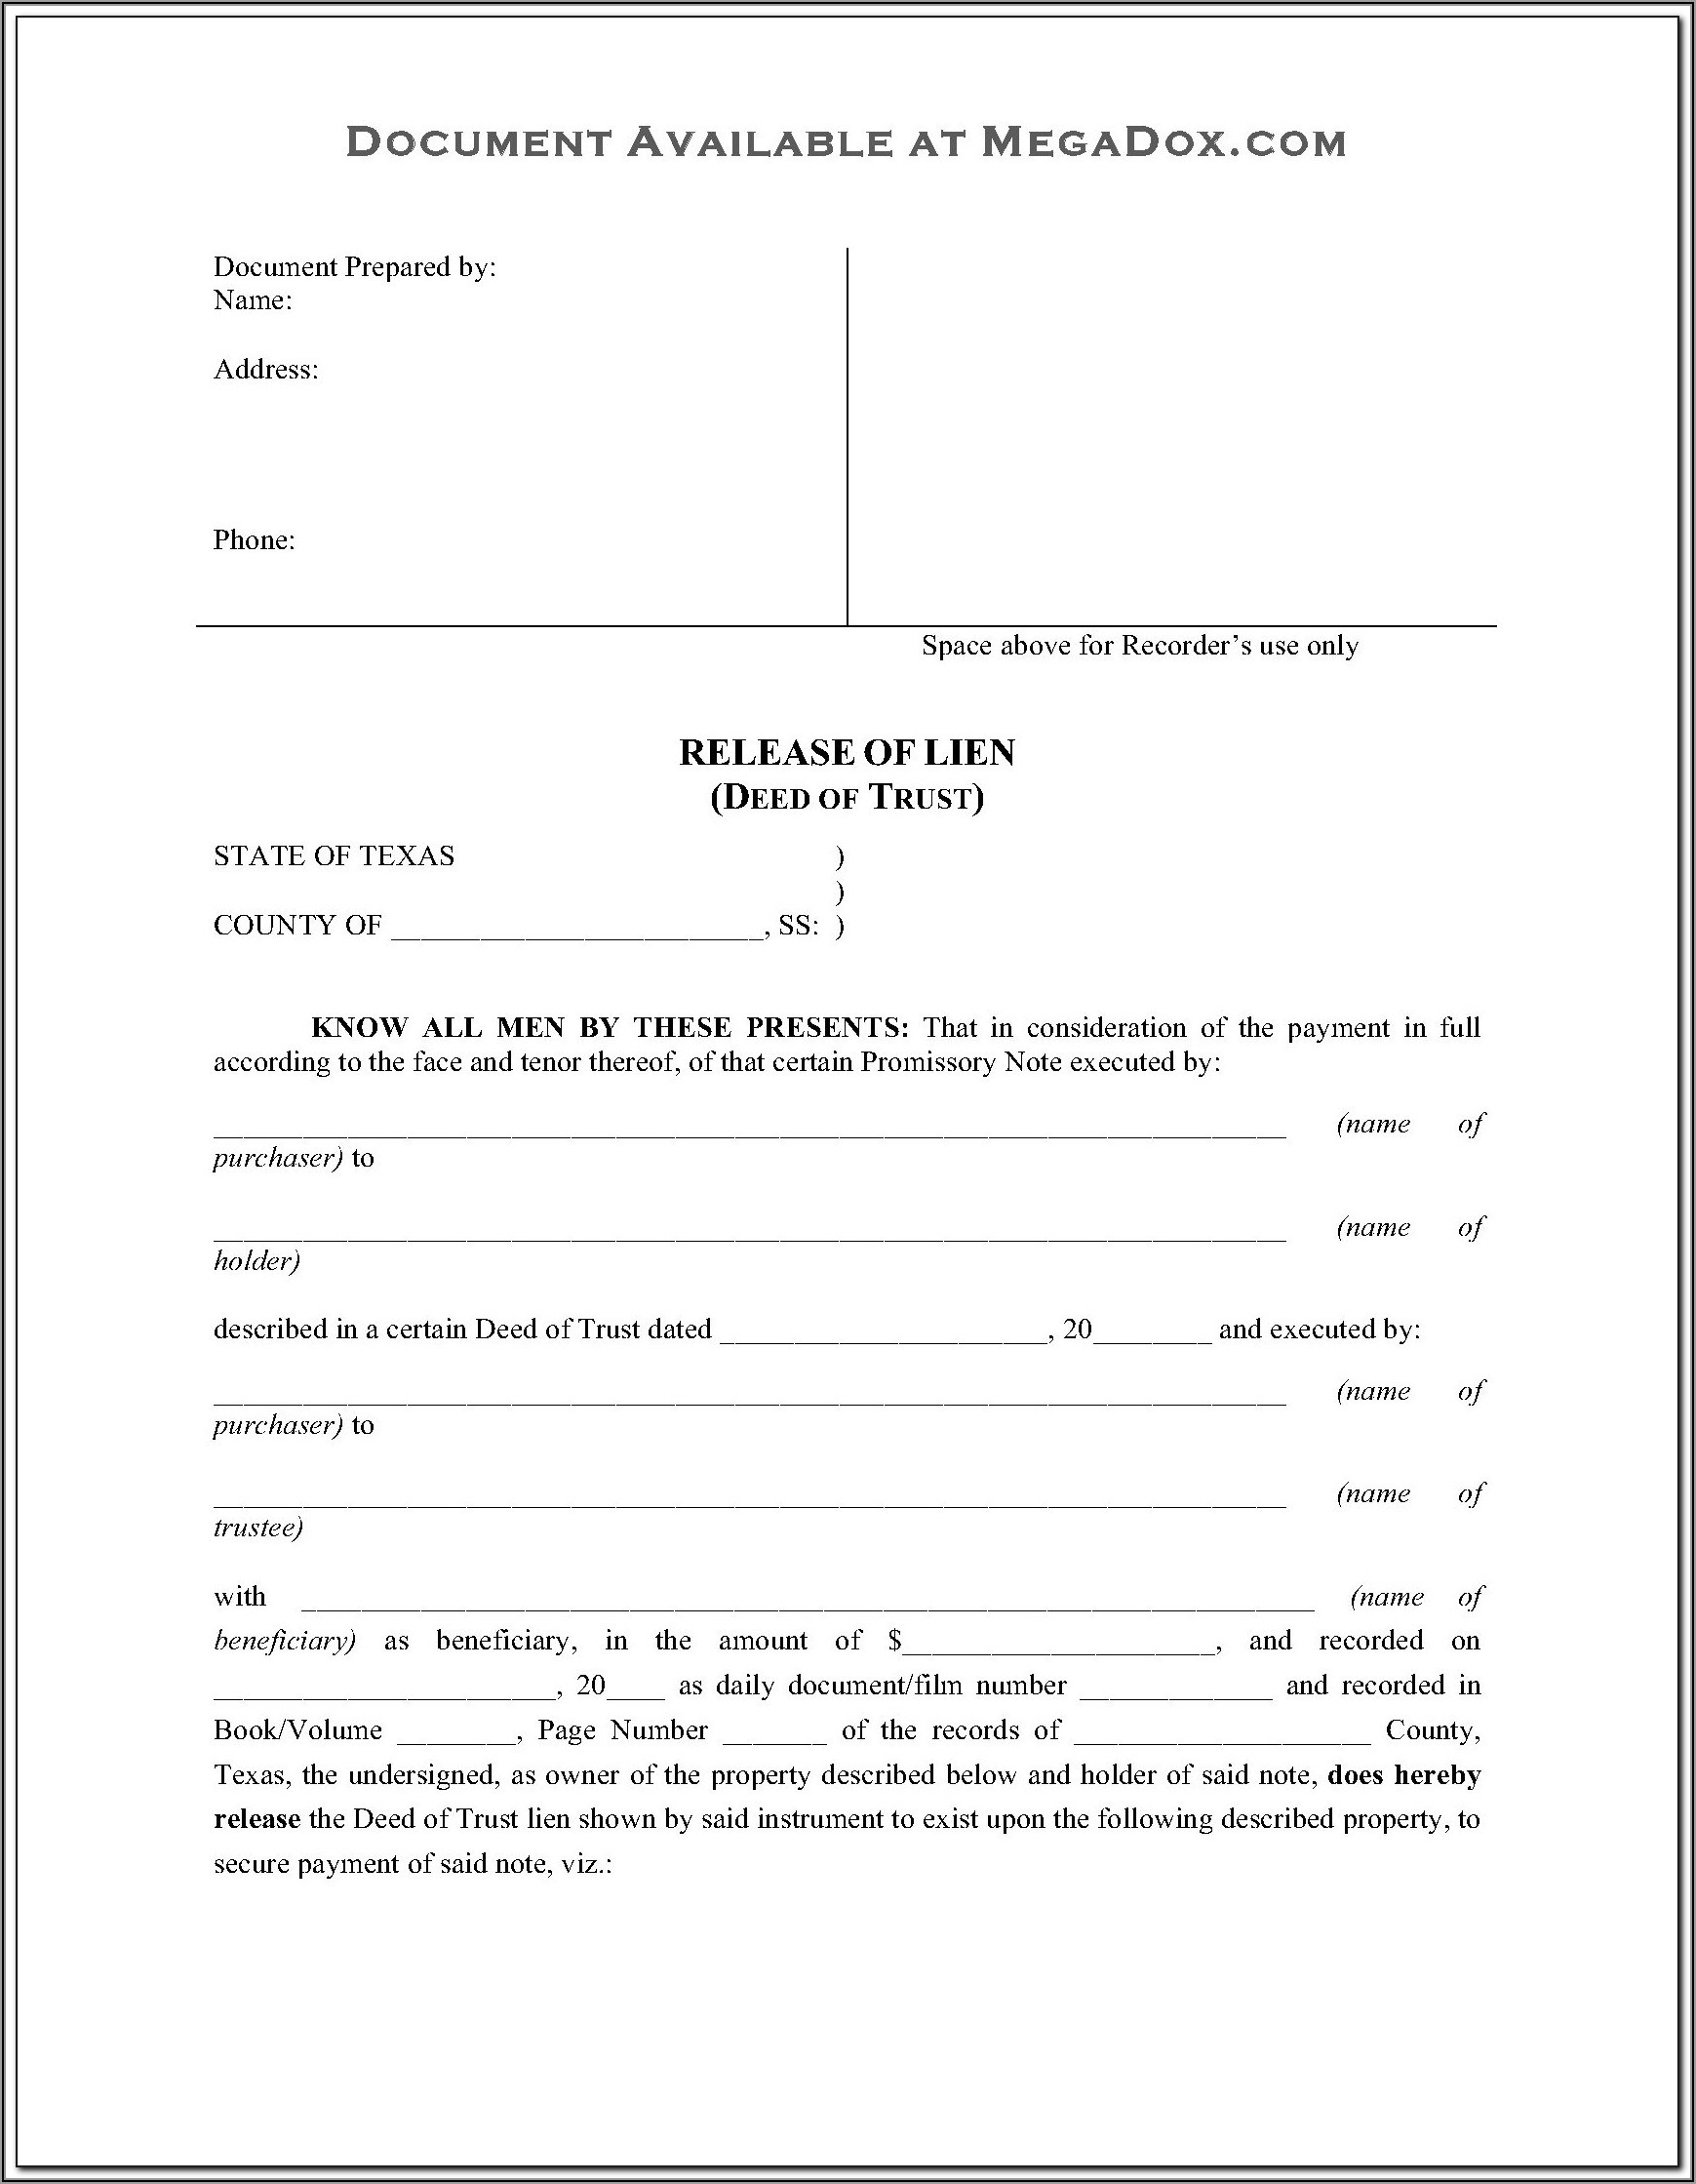 Printable Beneficiary Deed Form Arizona